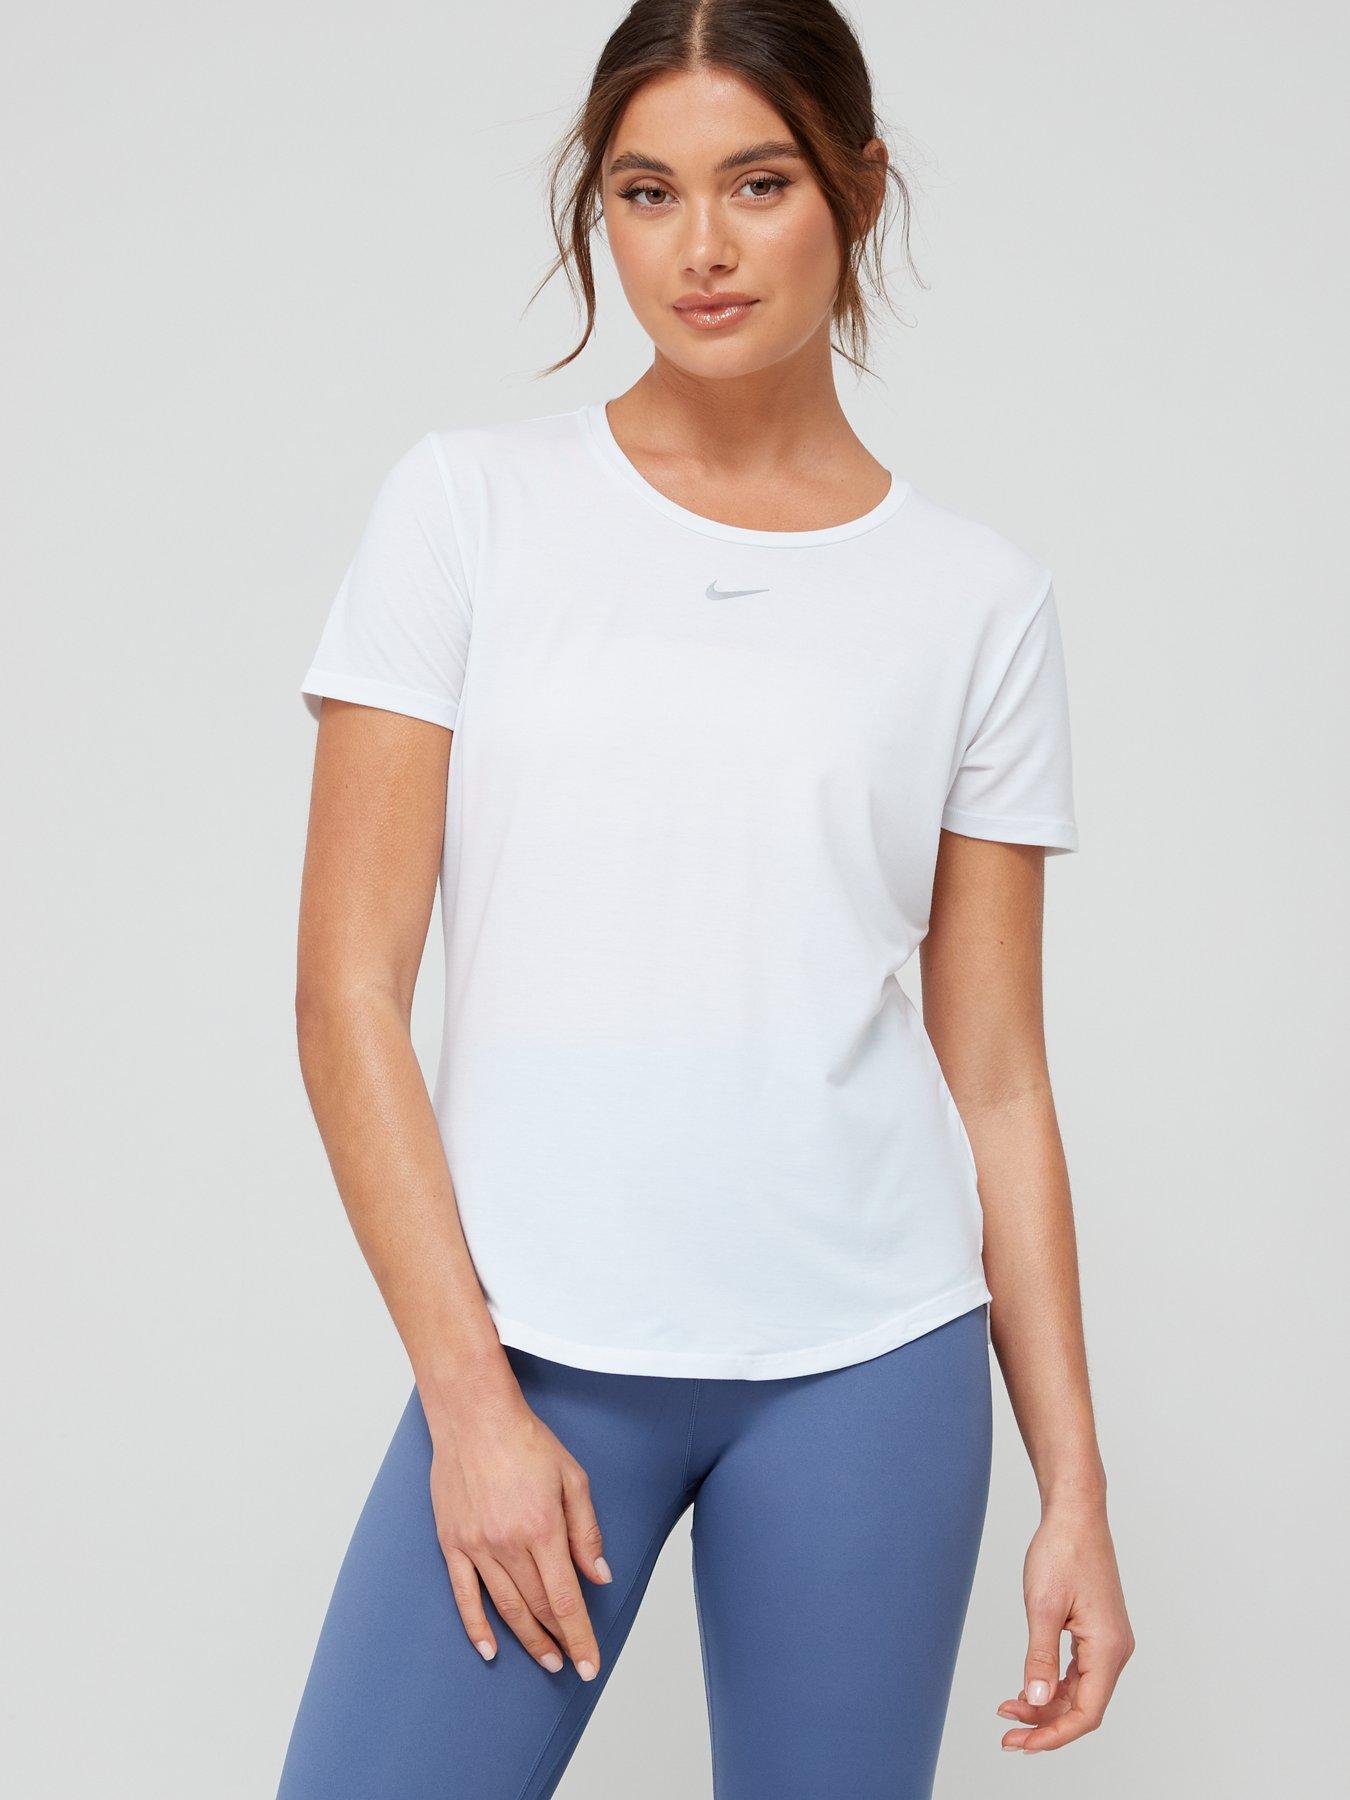 Buy Nike Yoga Luxe Short Sleeve Top - Orange At 50% Off